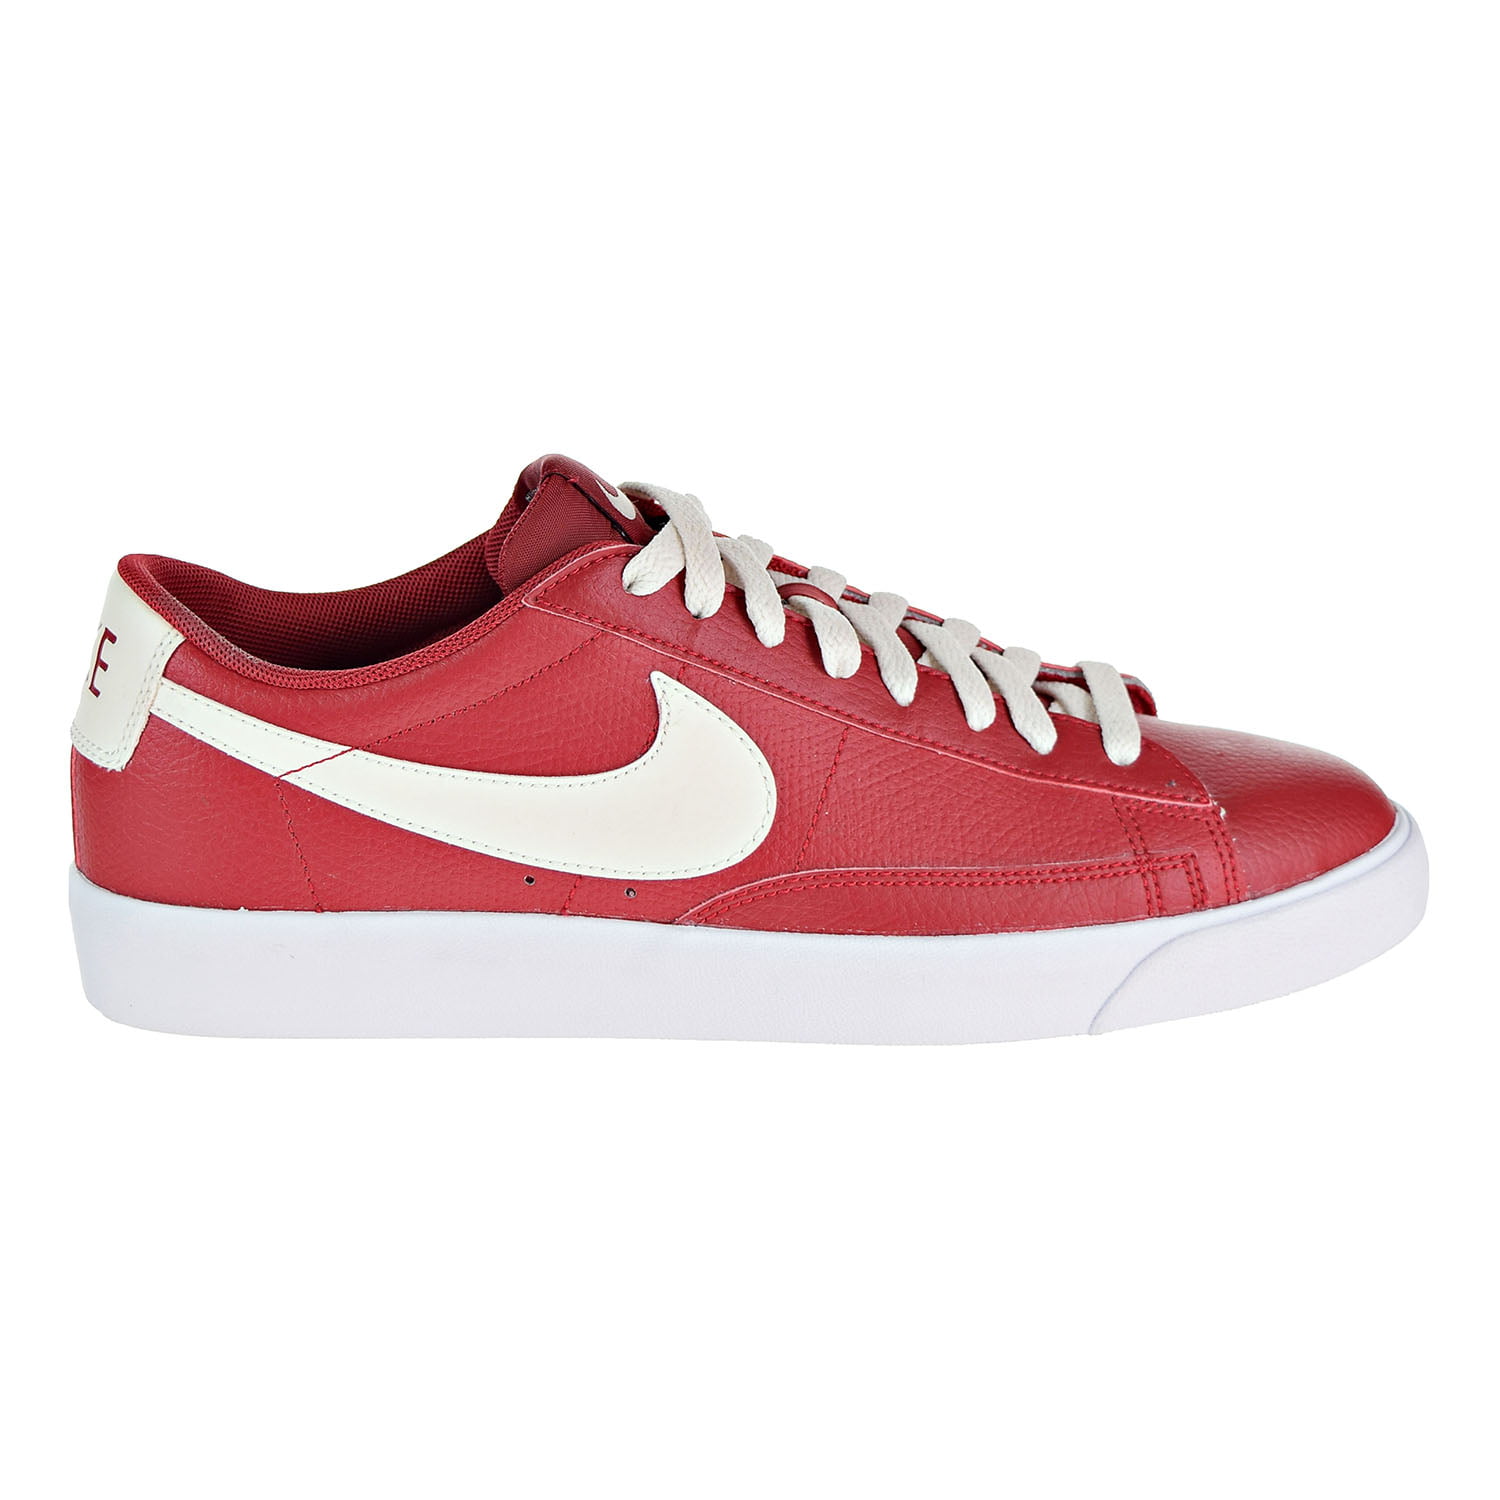 Nike Blazer Leather Shoes Red/White Walmart.com